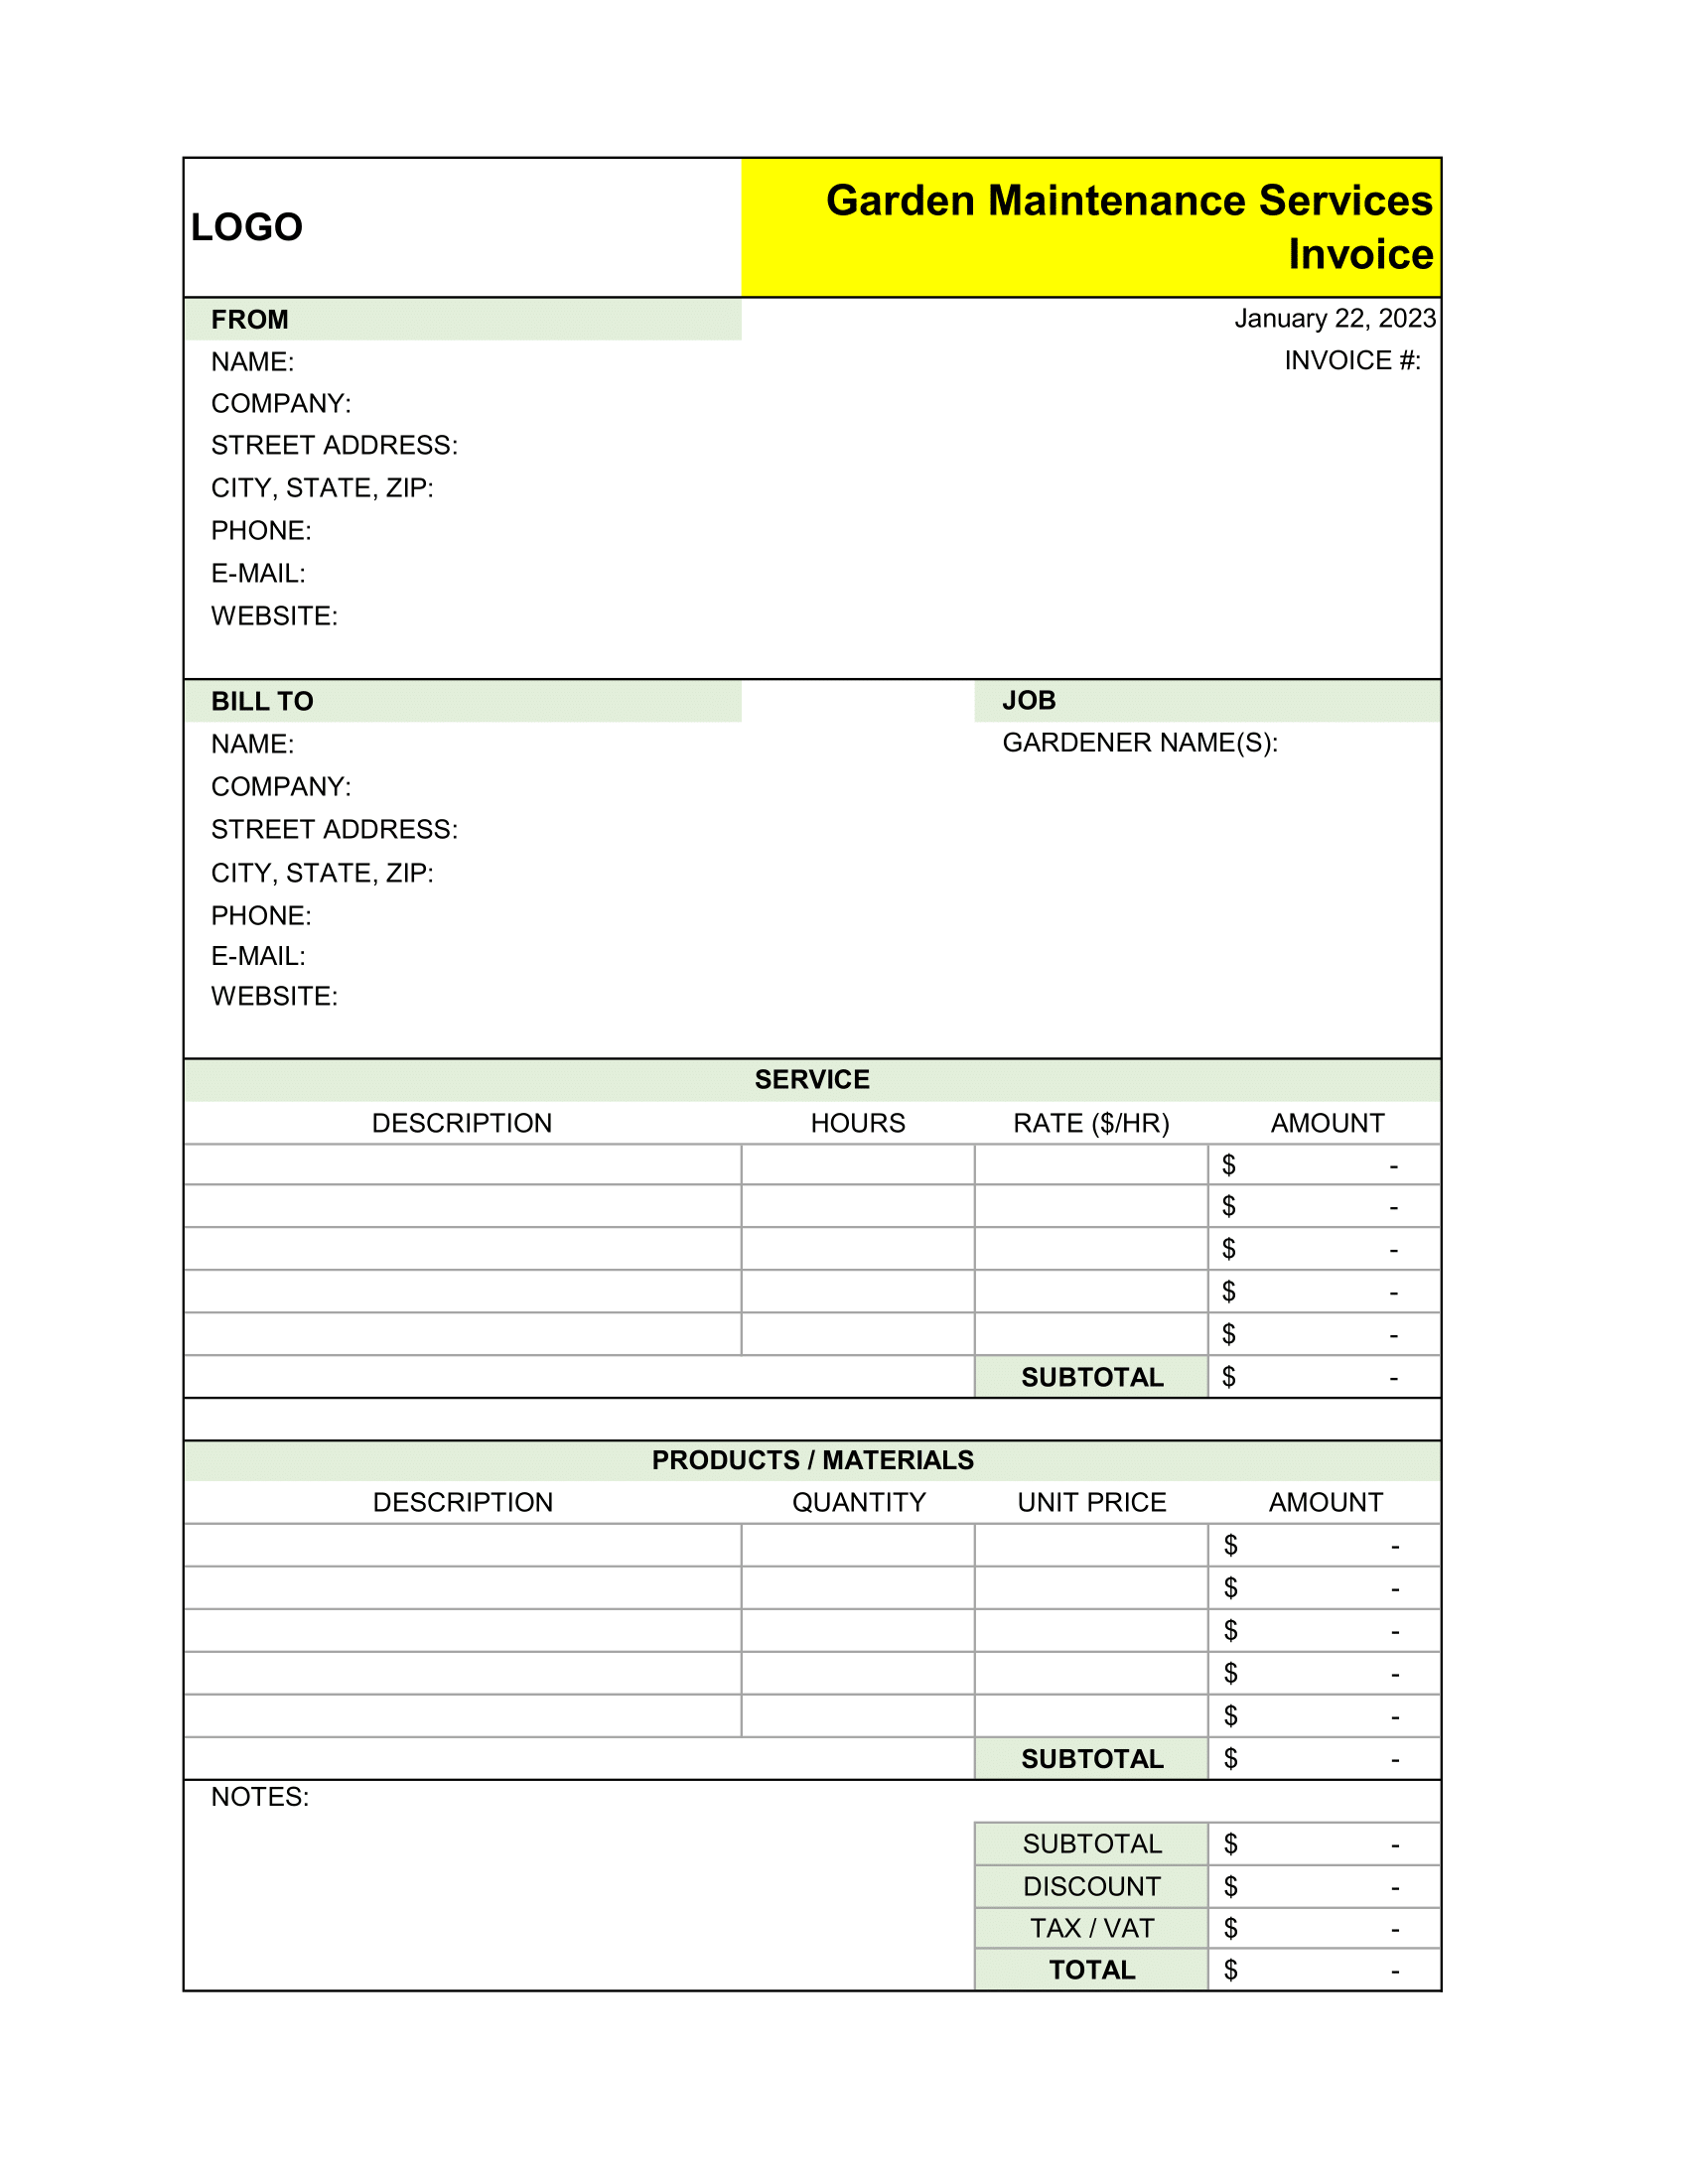 Garden Maintenance Services Invoice Format in Excel sheet